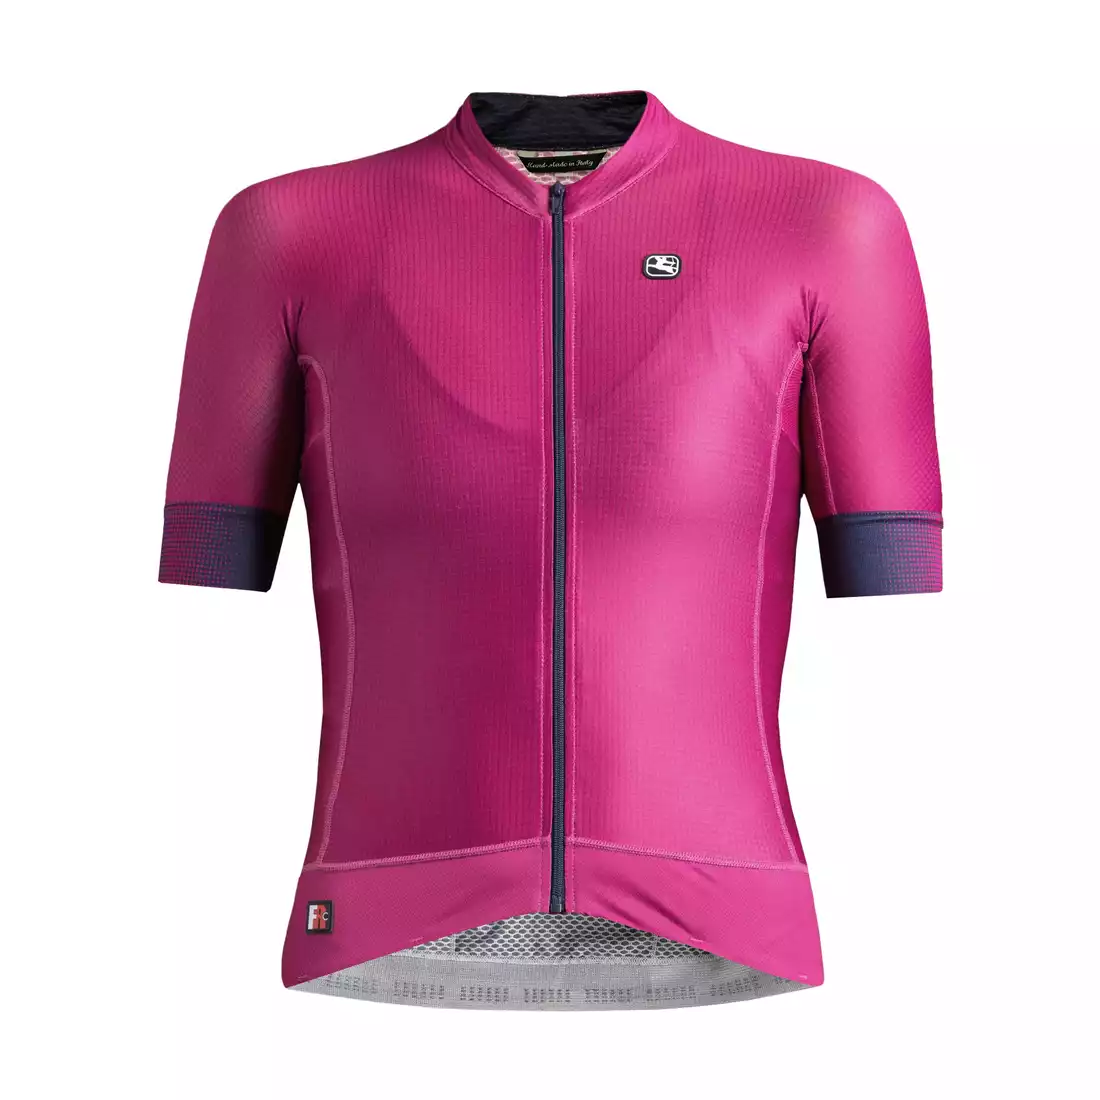 GIORDANA FR-C PRO damska koszulka rowerowa fioletowa